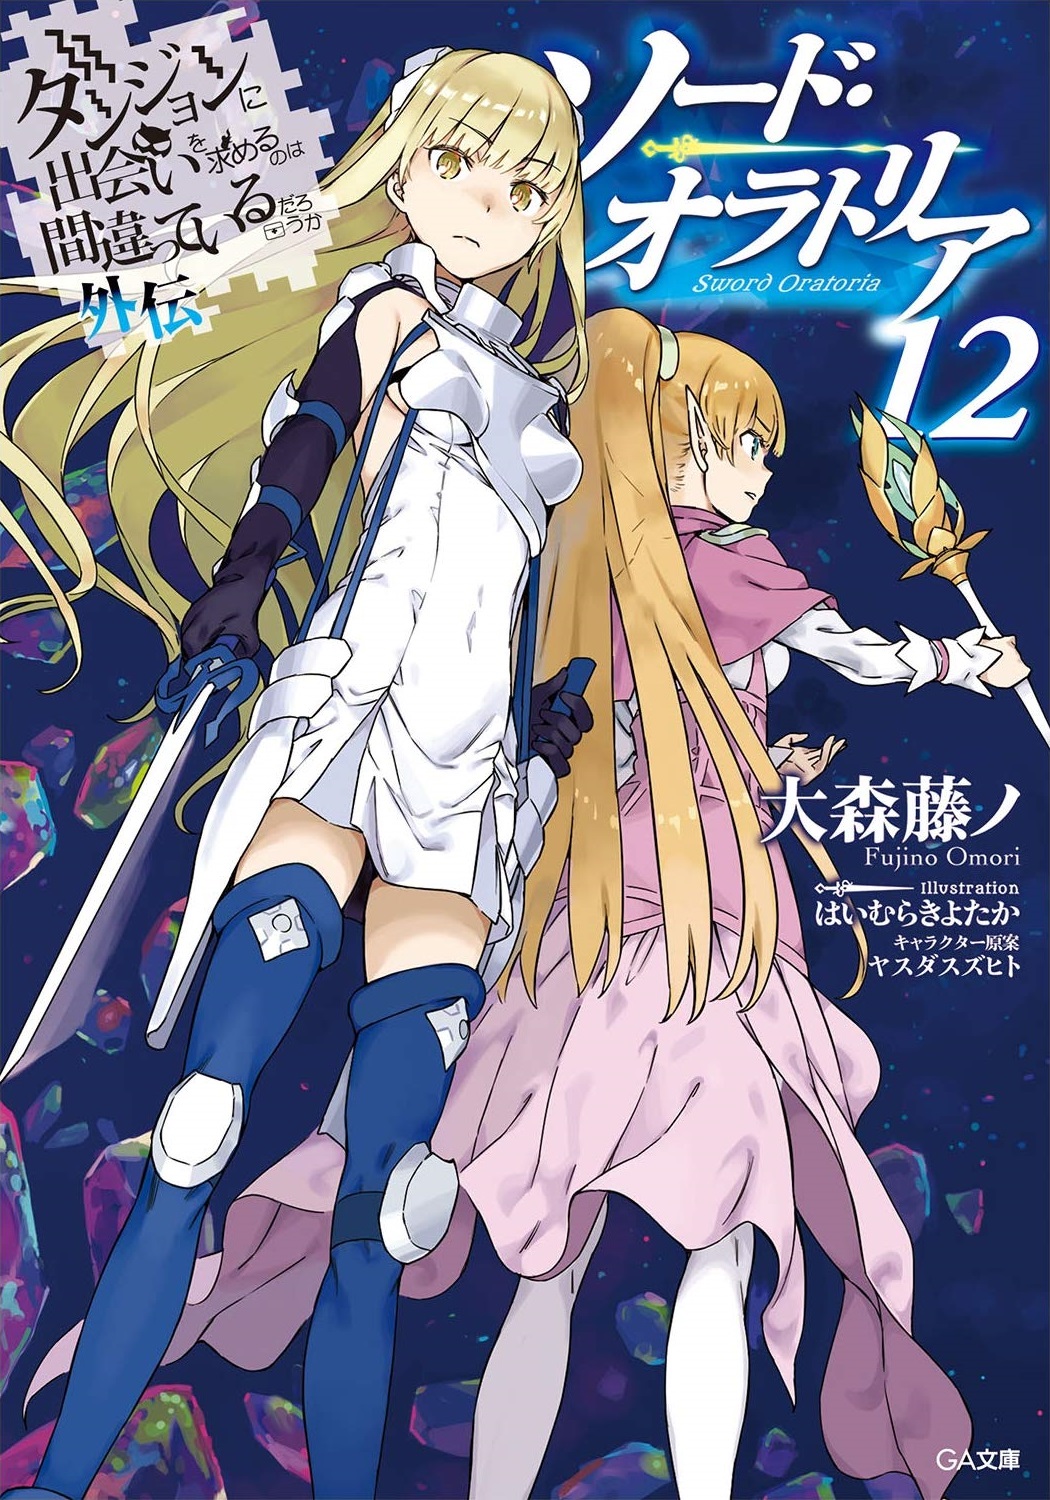 VOLUME 13: Resumo do capitulo 5 Light Novel - Dungeon Ni Deai